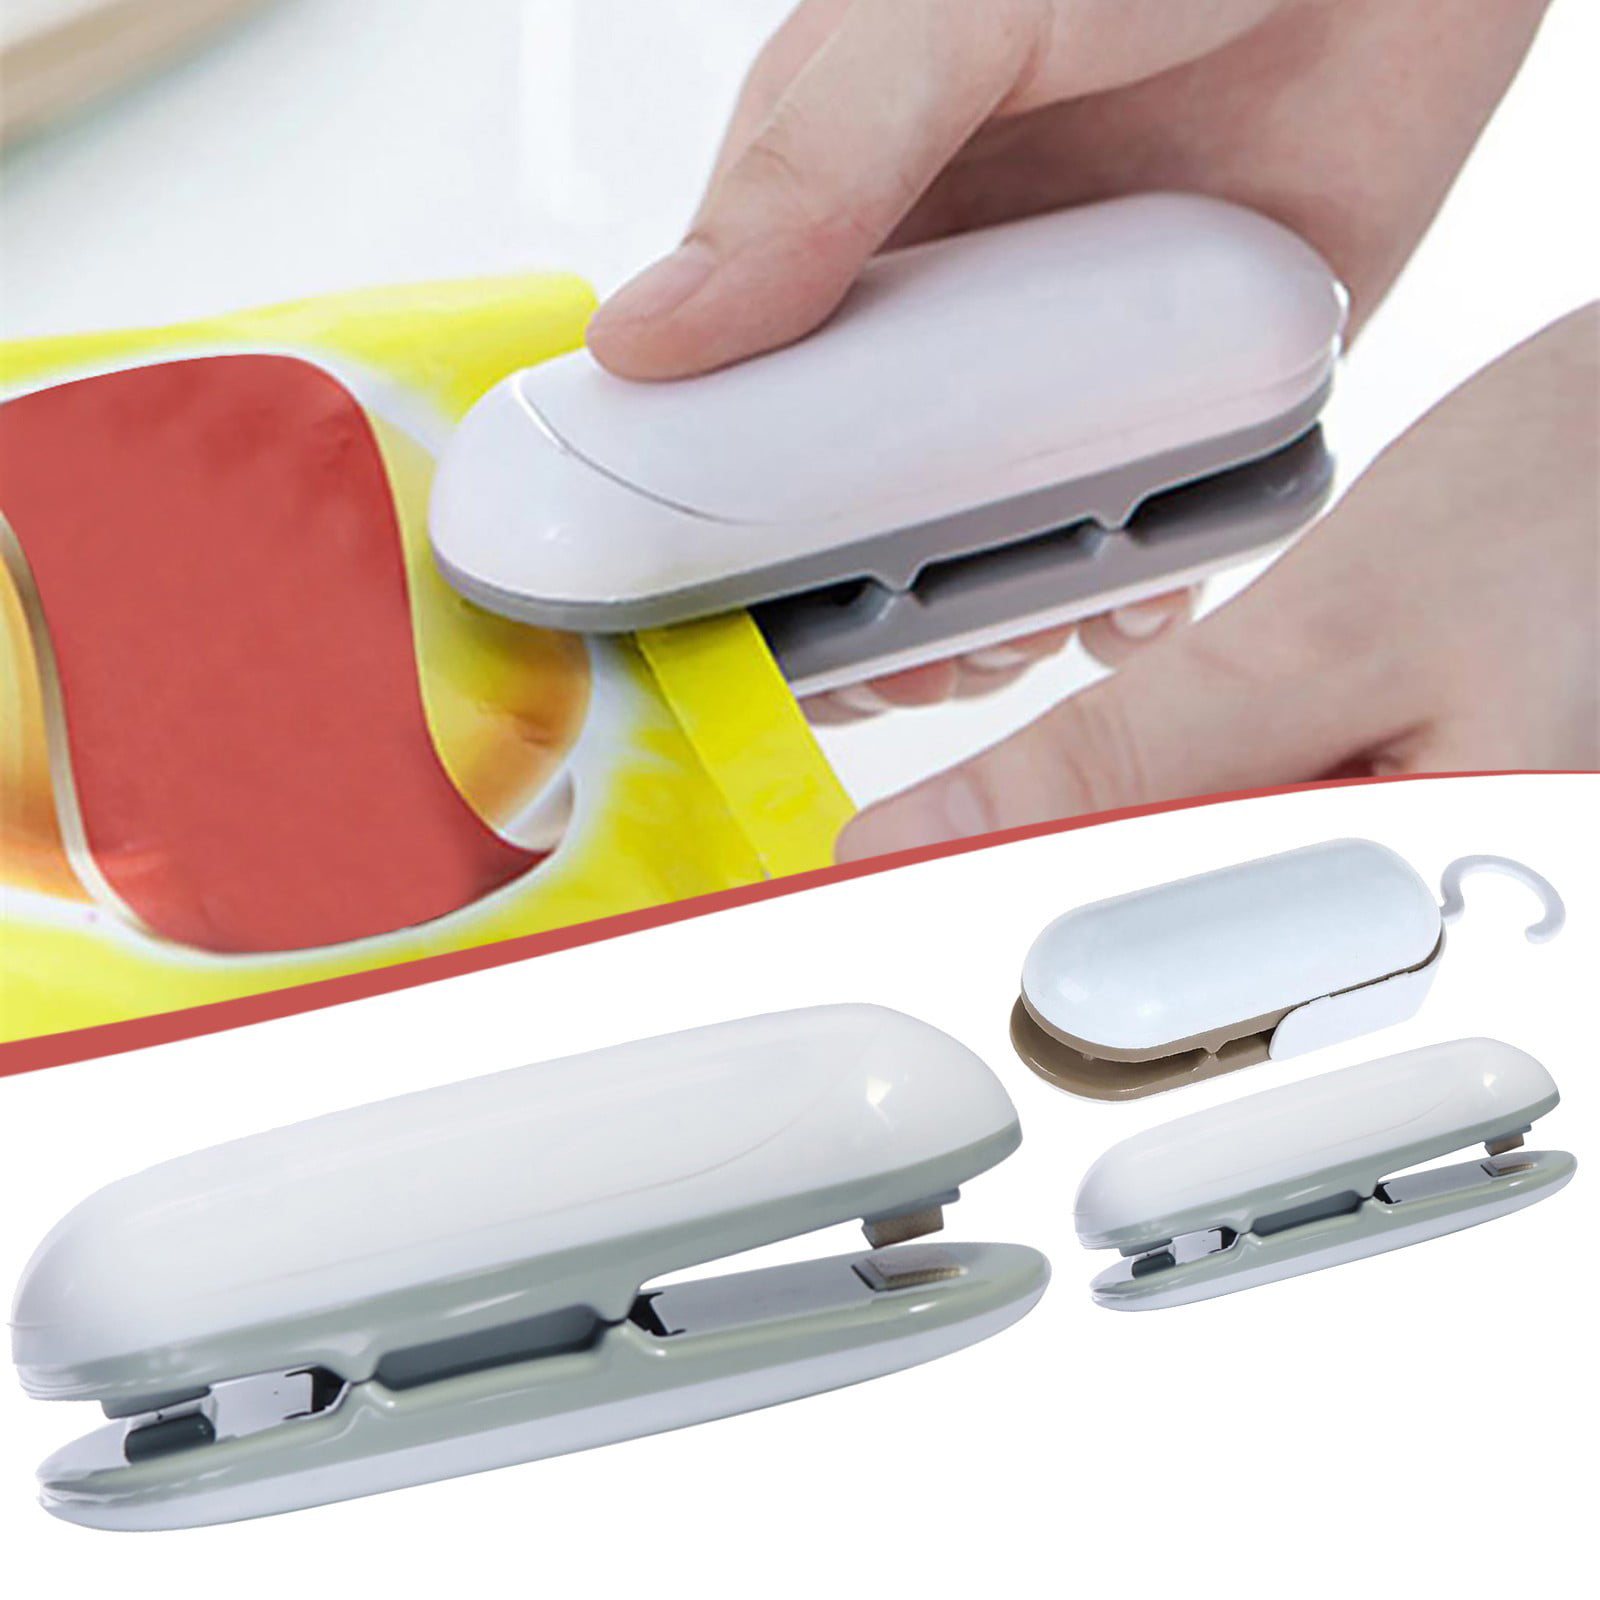 Portable Mini Sealing Heat Handheld Plastic Bag Impluse Sealer Kitchen Tool New 